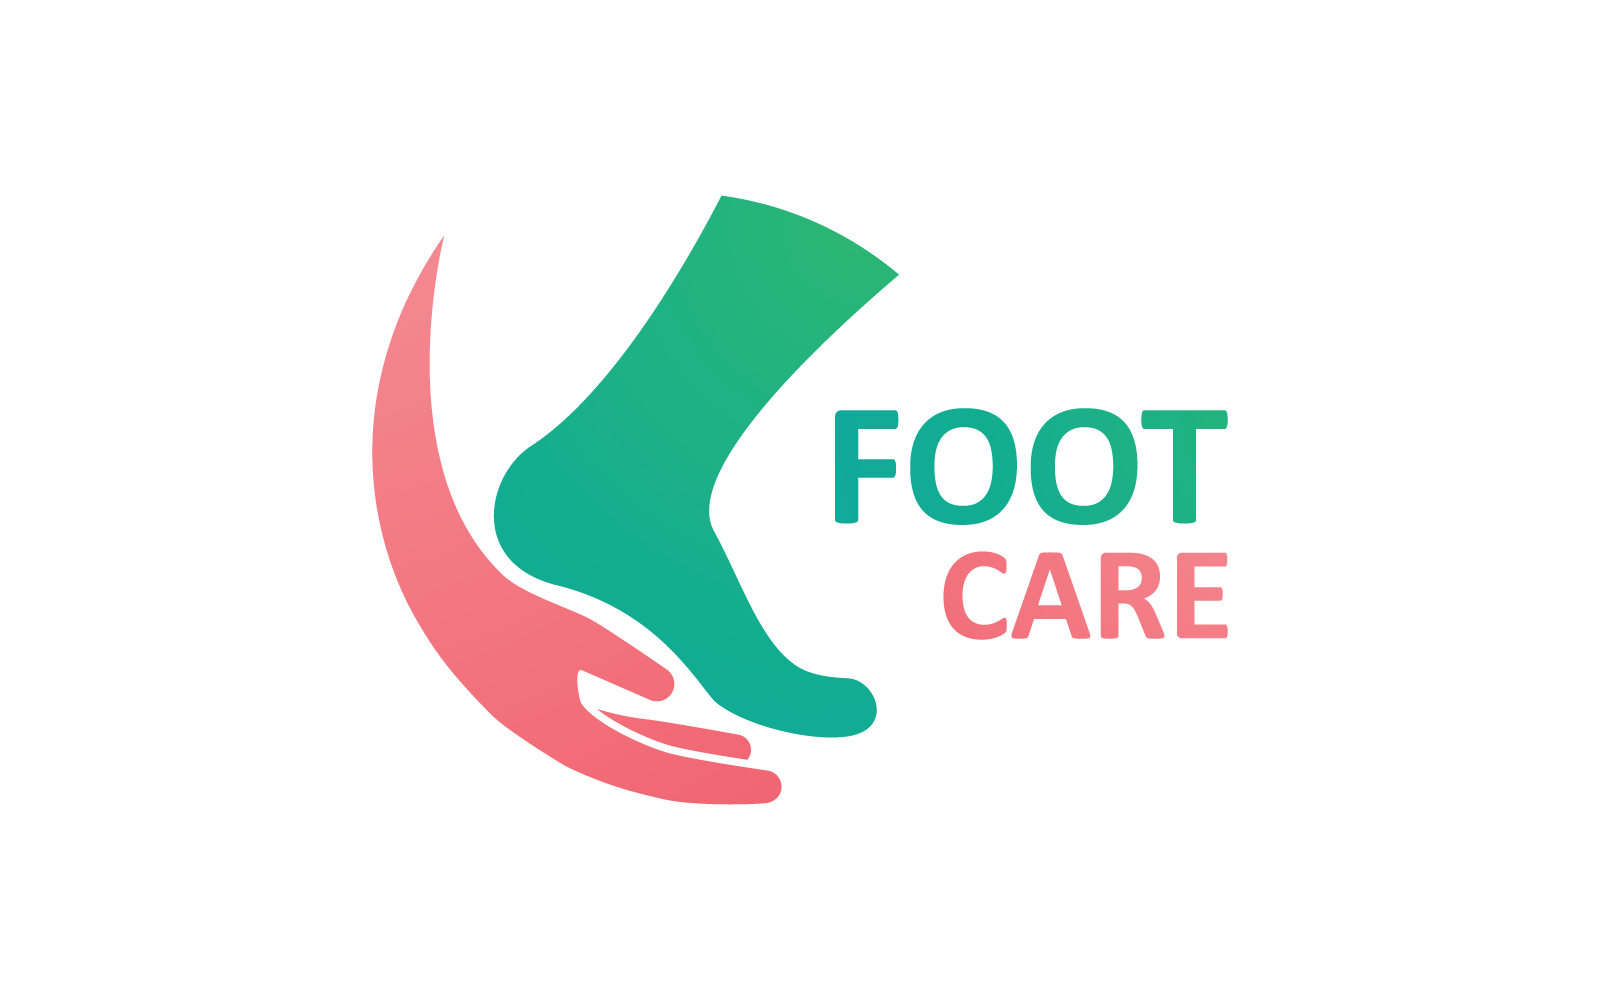 Foot care logo illustration vector design Logo Template